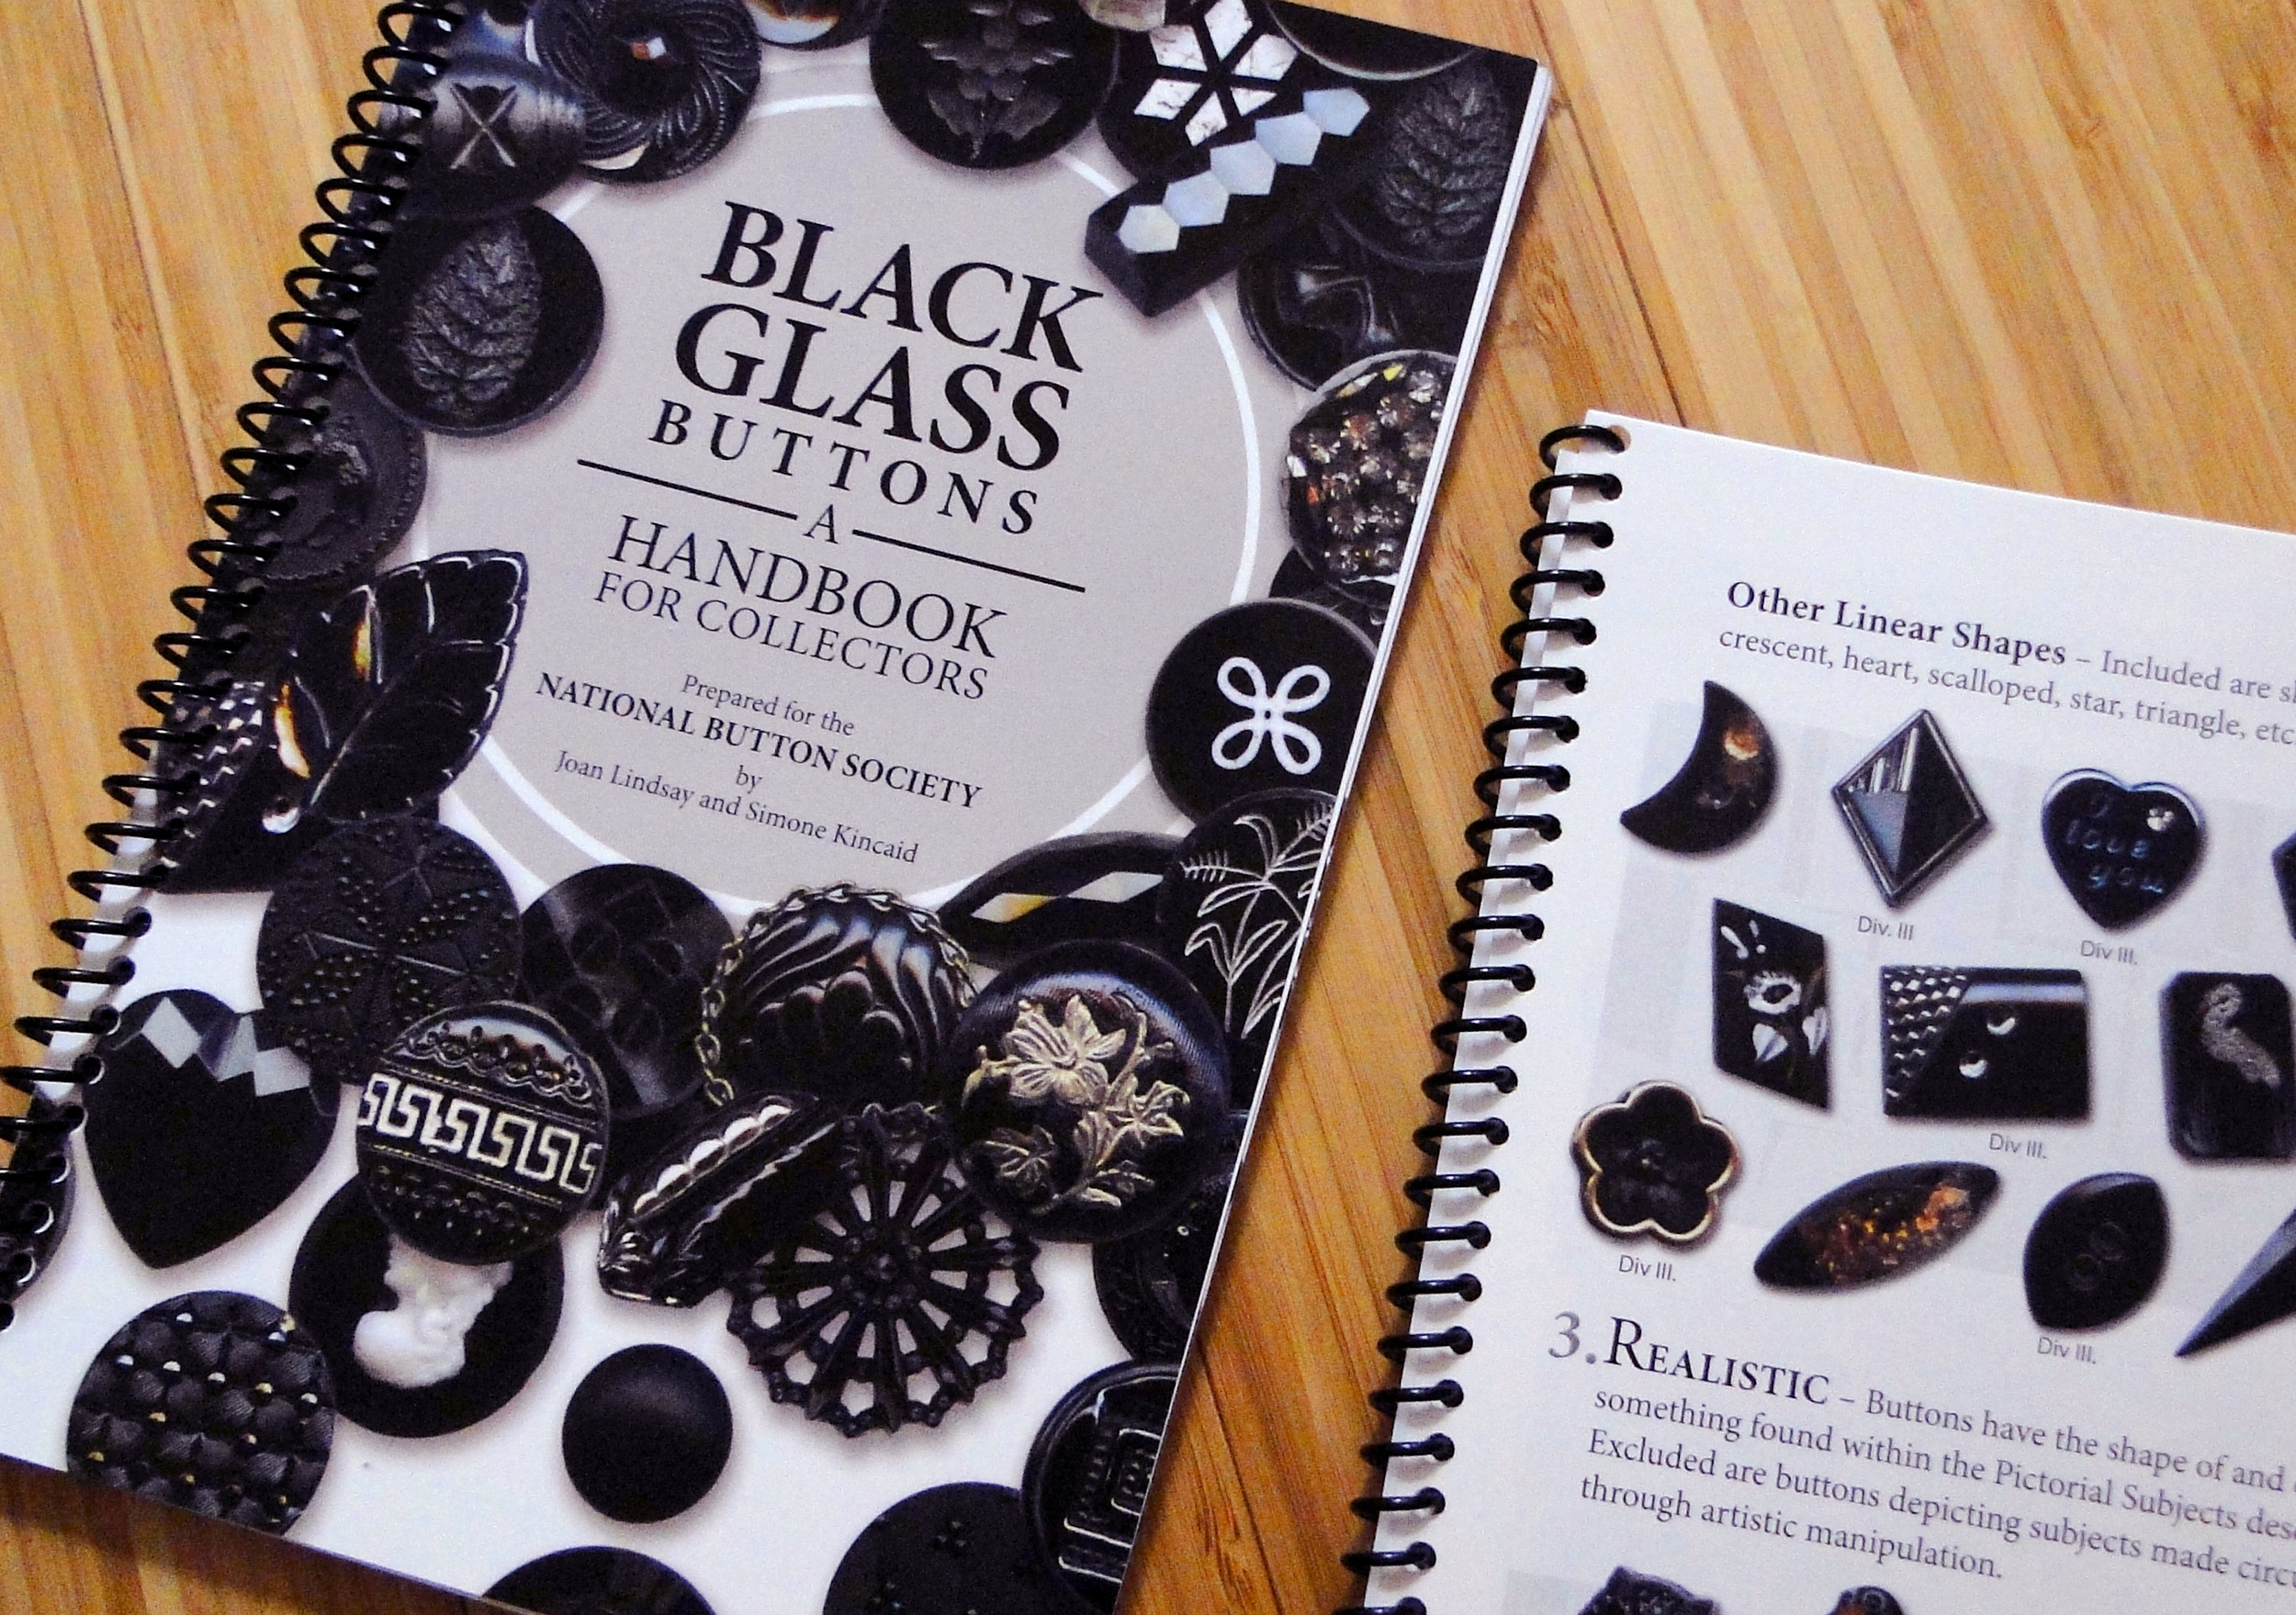 Black Glass Buttons: A Handbook for Collectors